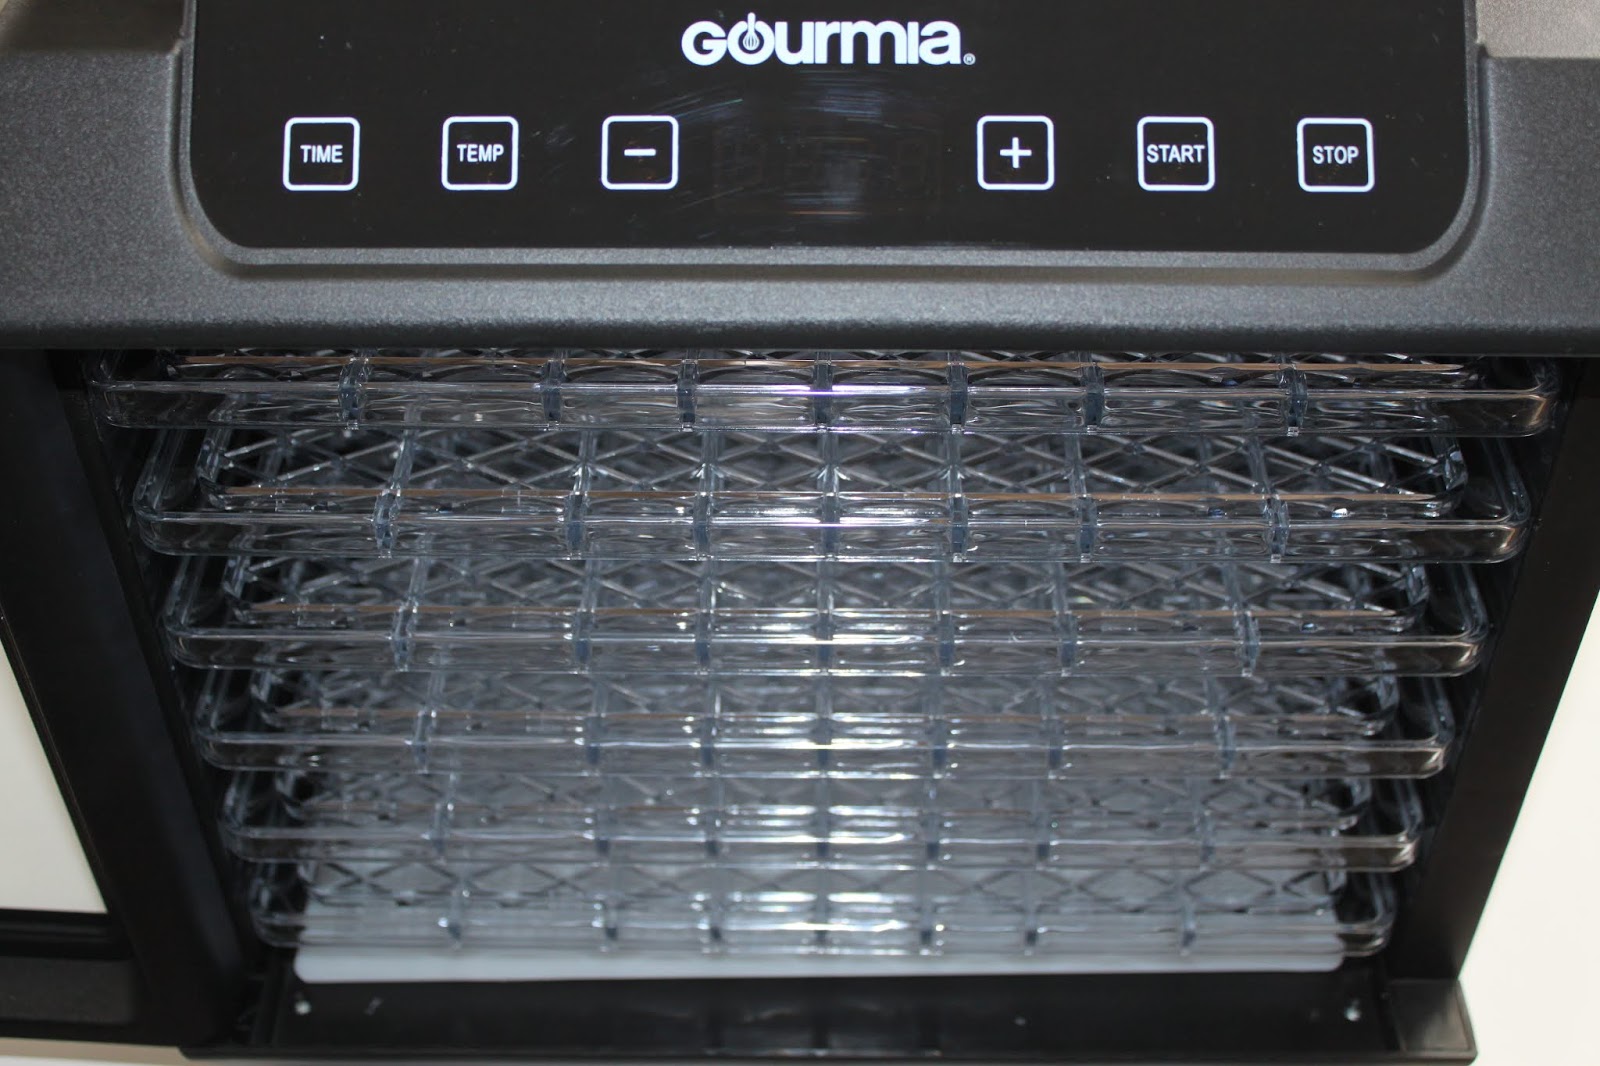 Stereowise Plus: Gourmia Digital Cut + Dry Compact Food Dehydrator